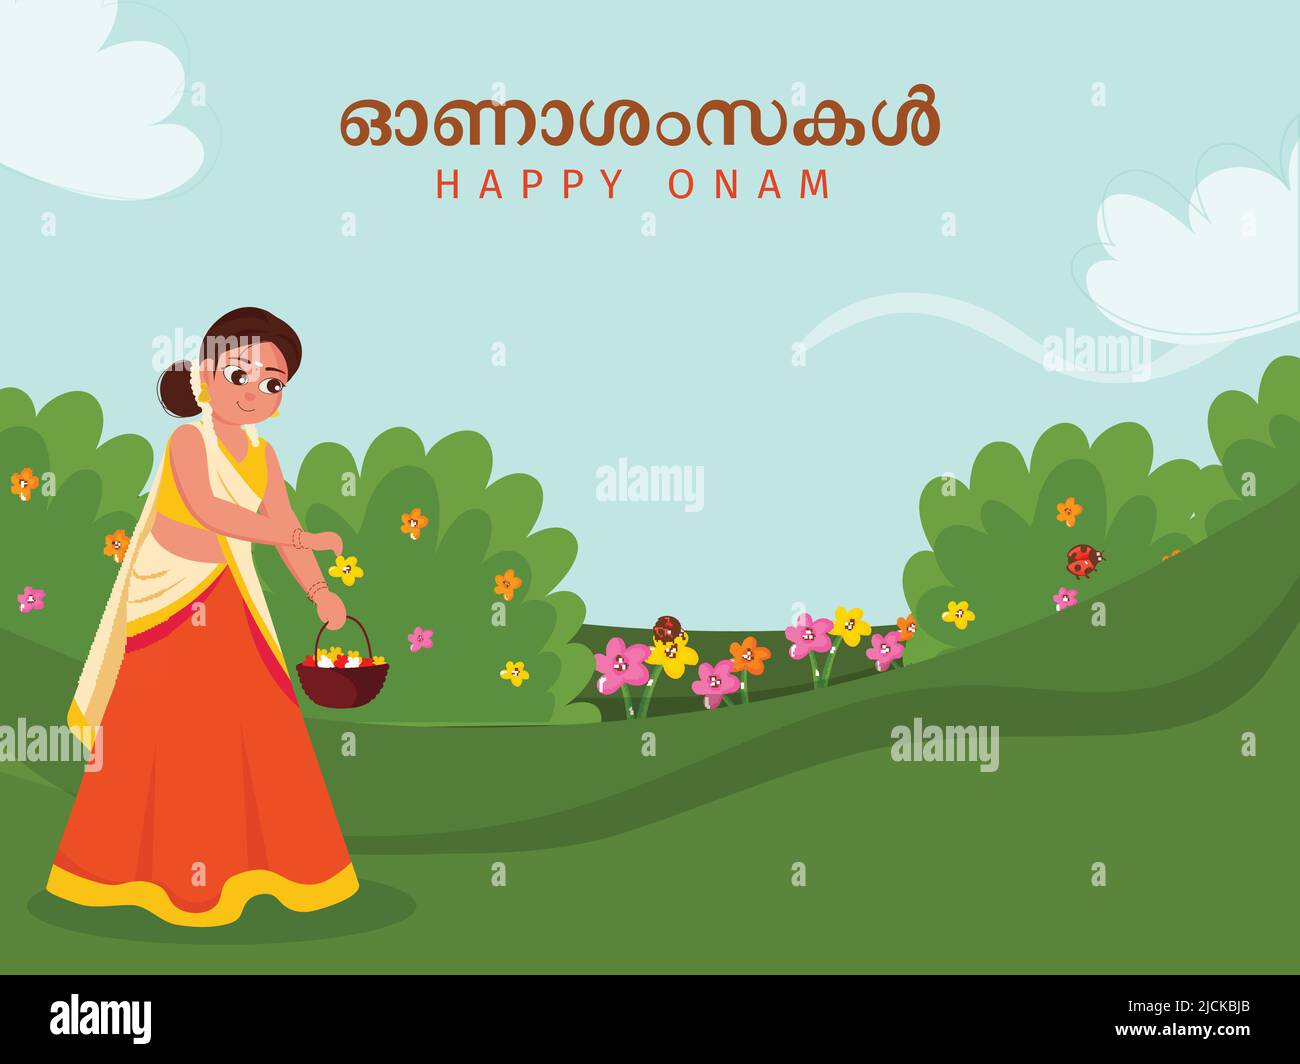 Happy Onam Font Written In Malayalam Language With Beautiful South ...